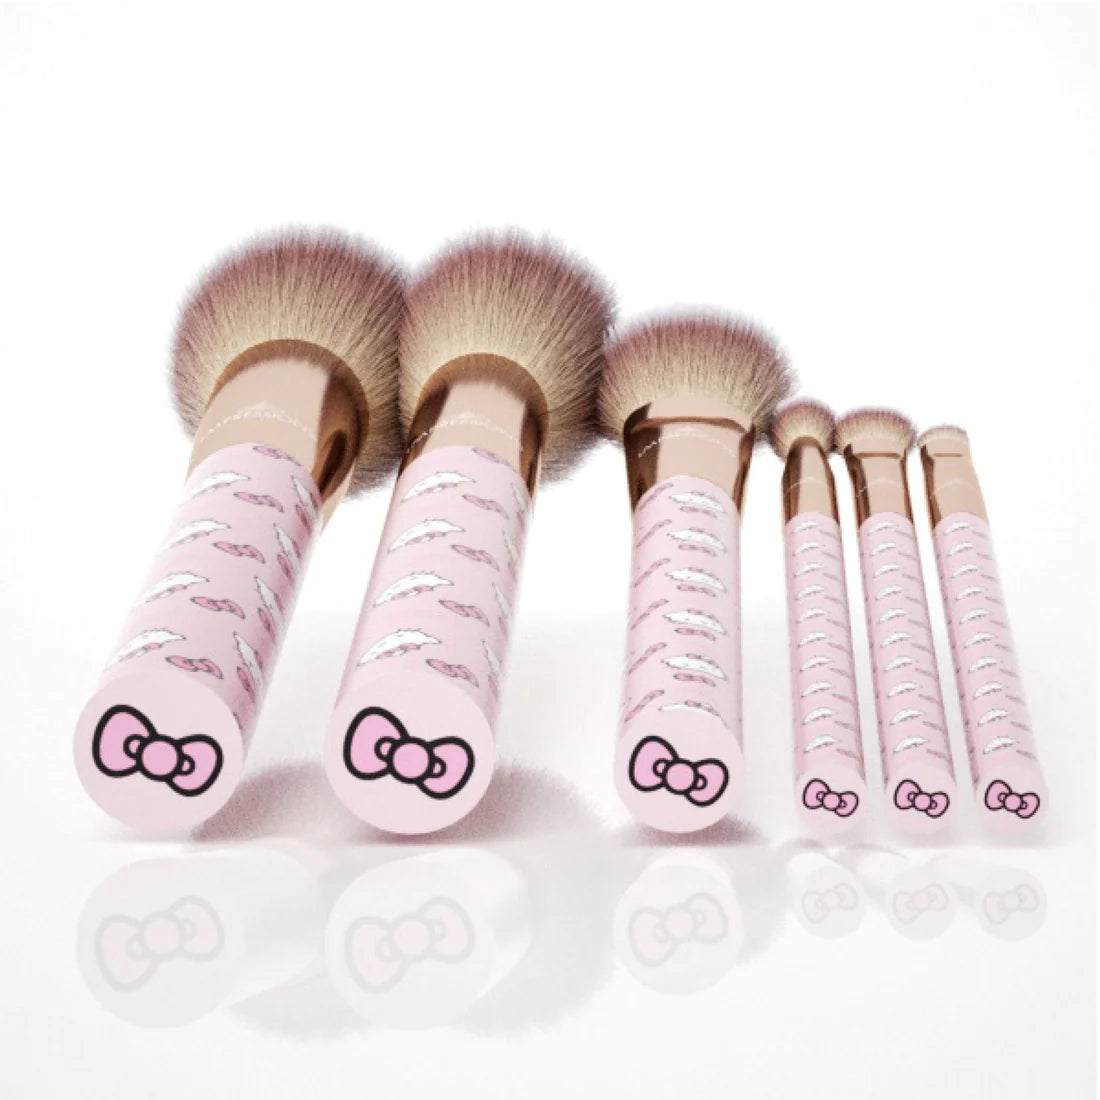 Impressions Vanity - Hello Kitty Supercute Signature 6pc Brush Set Pink